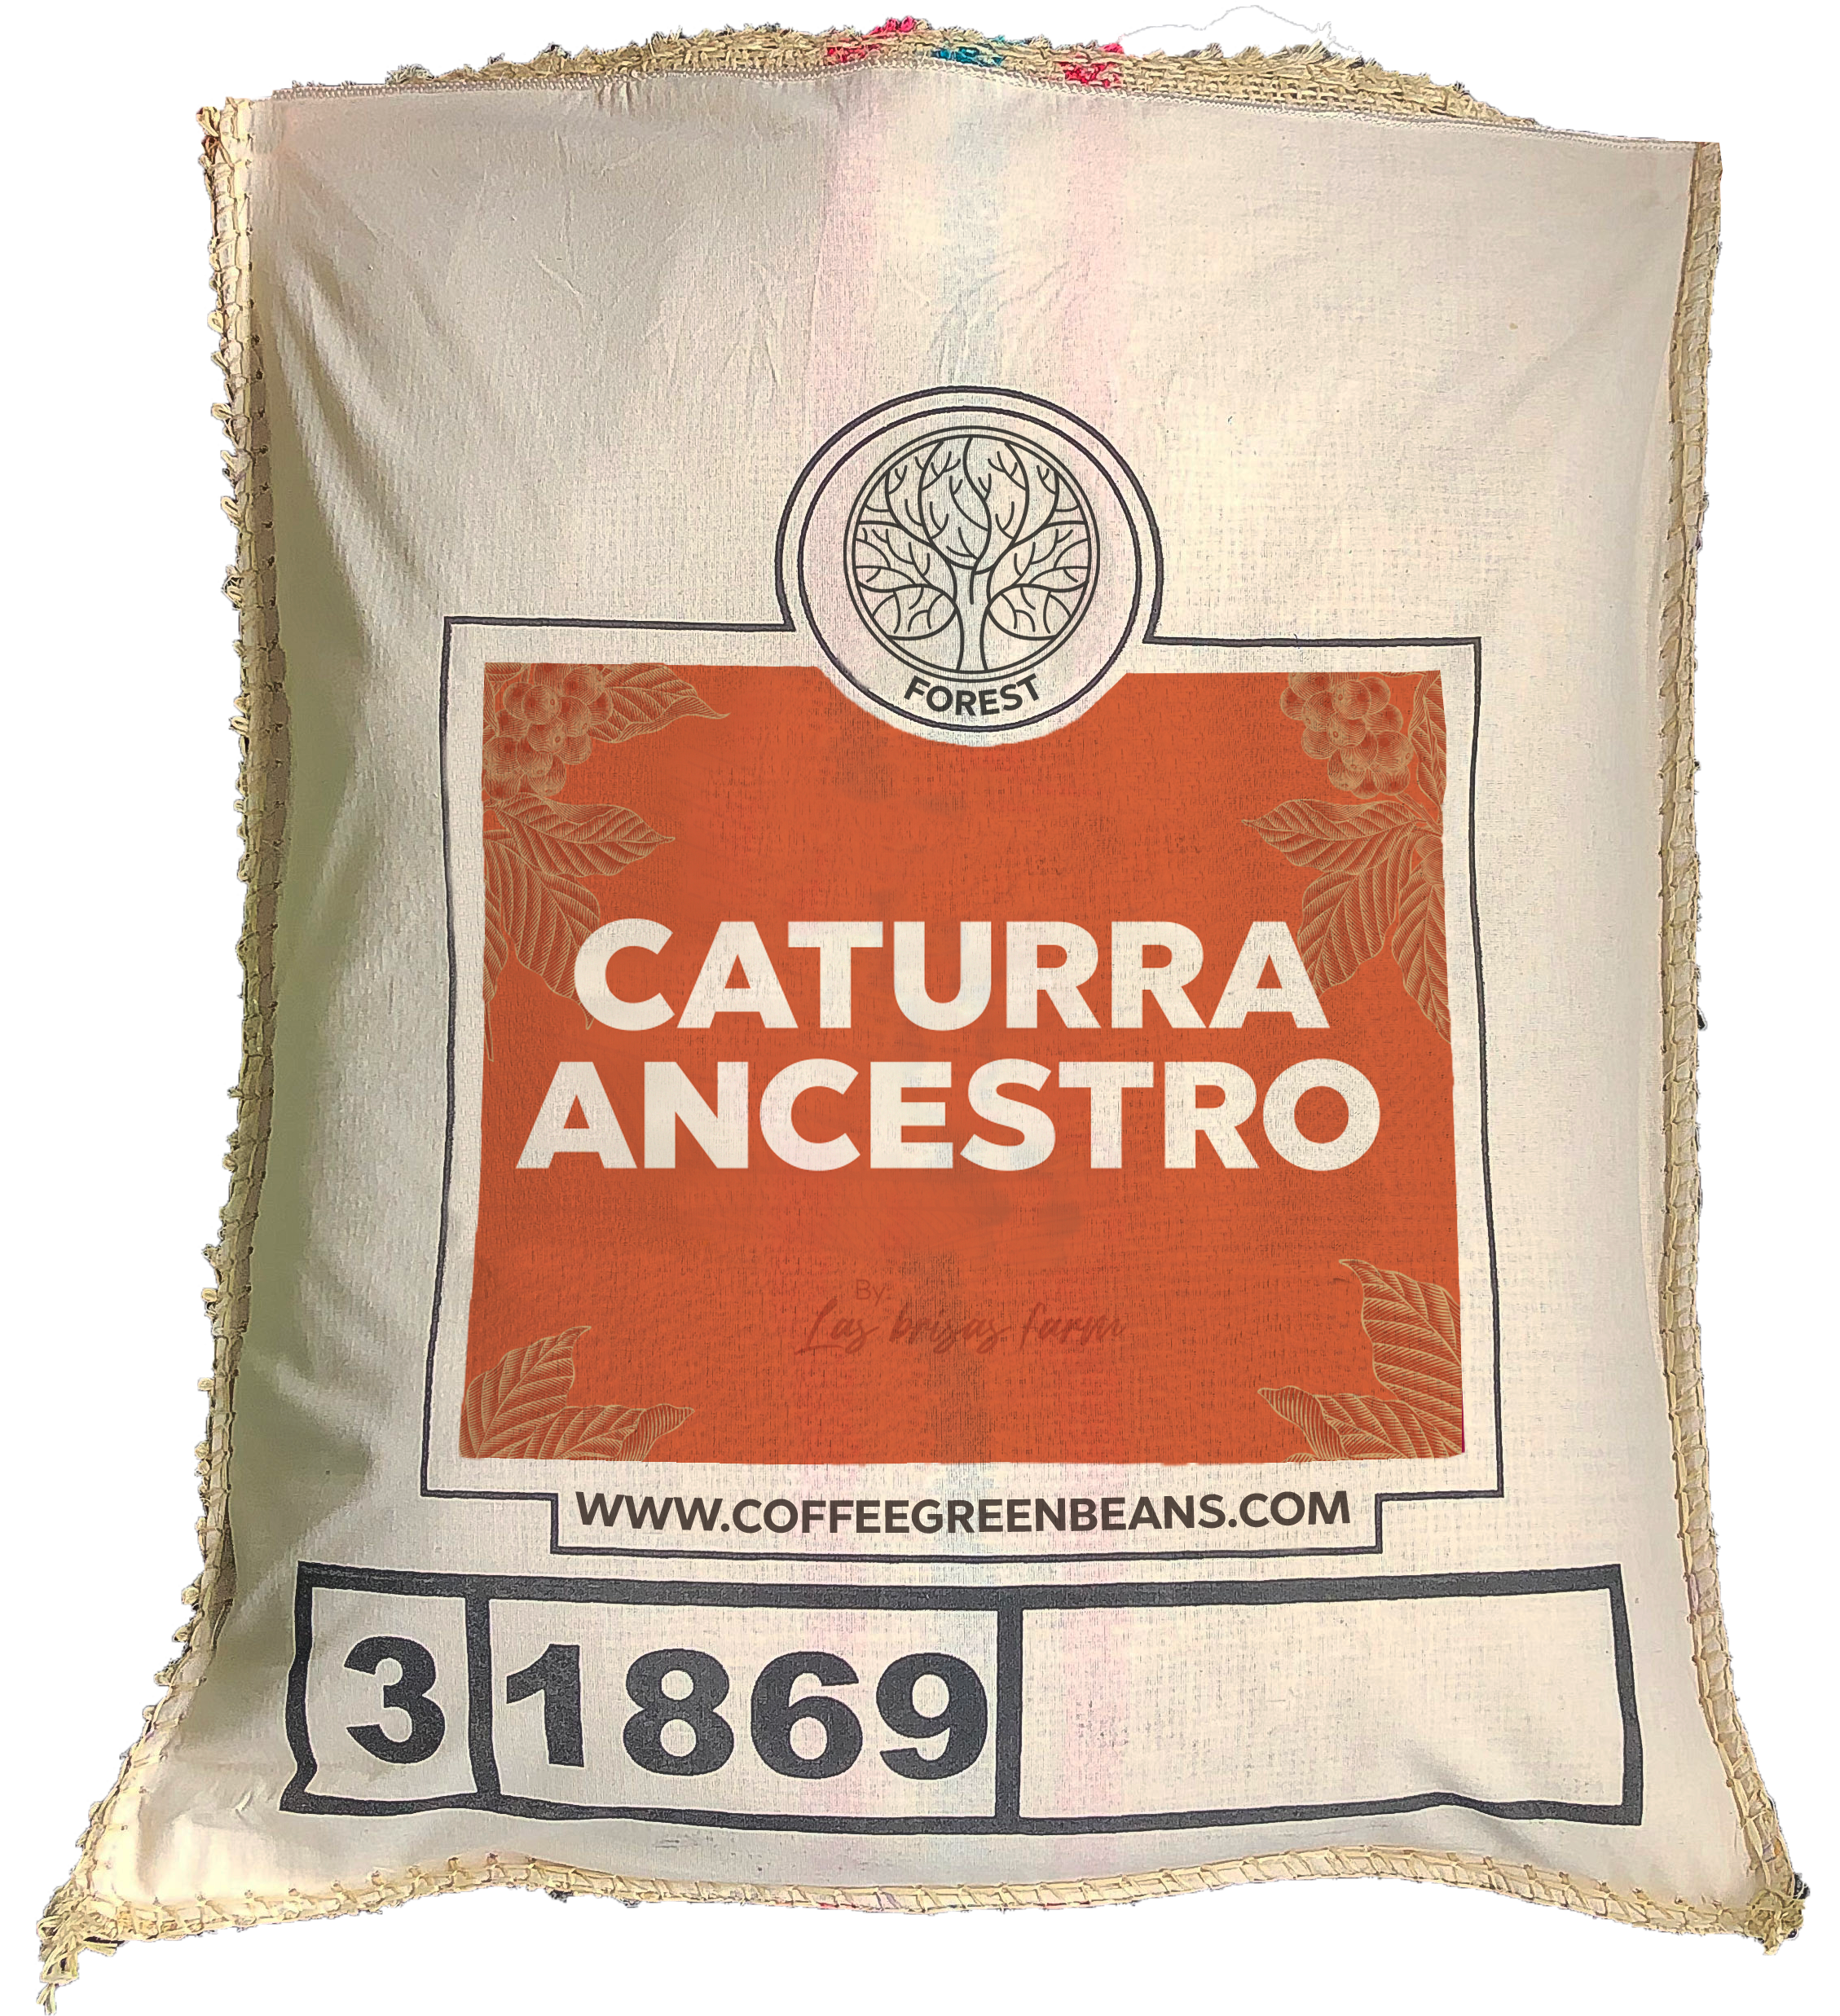 ANCESTRO CATURRA - Forest Coffee 